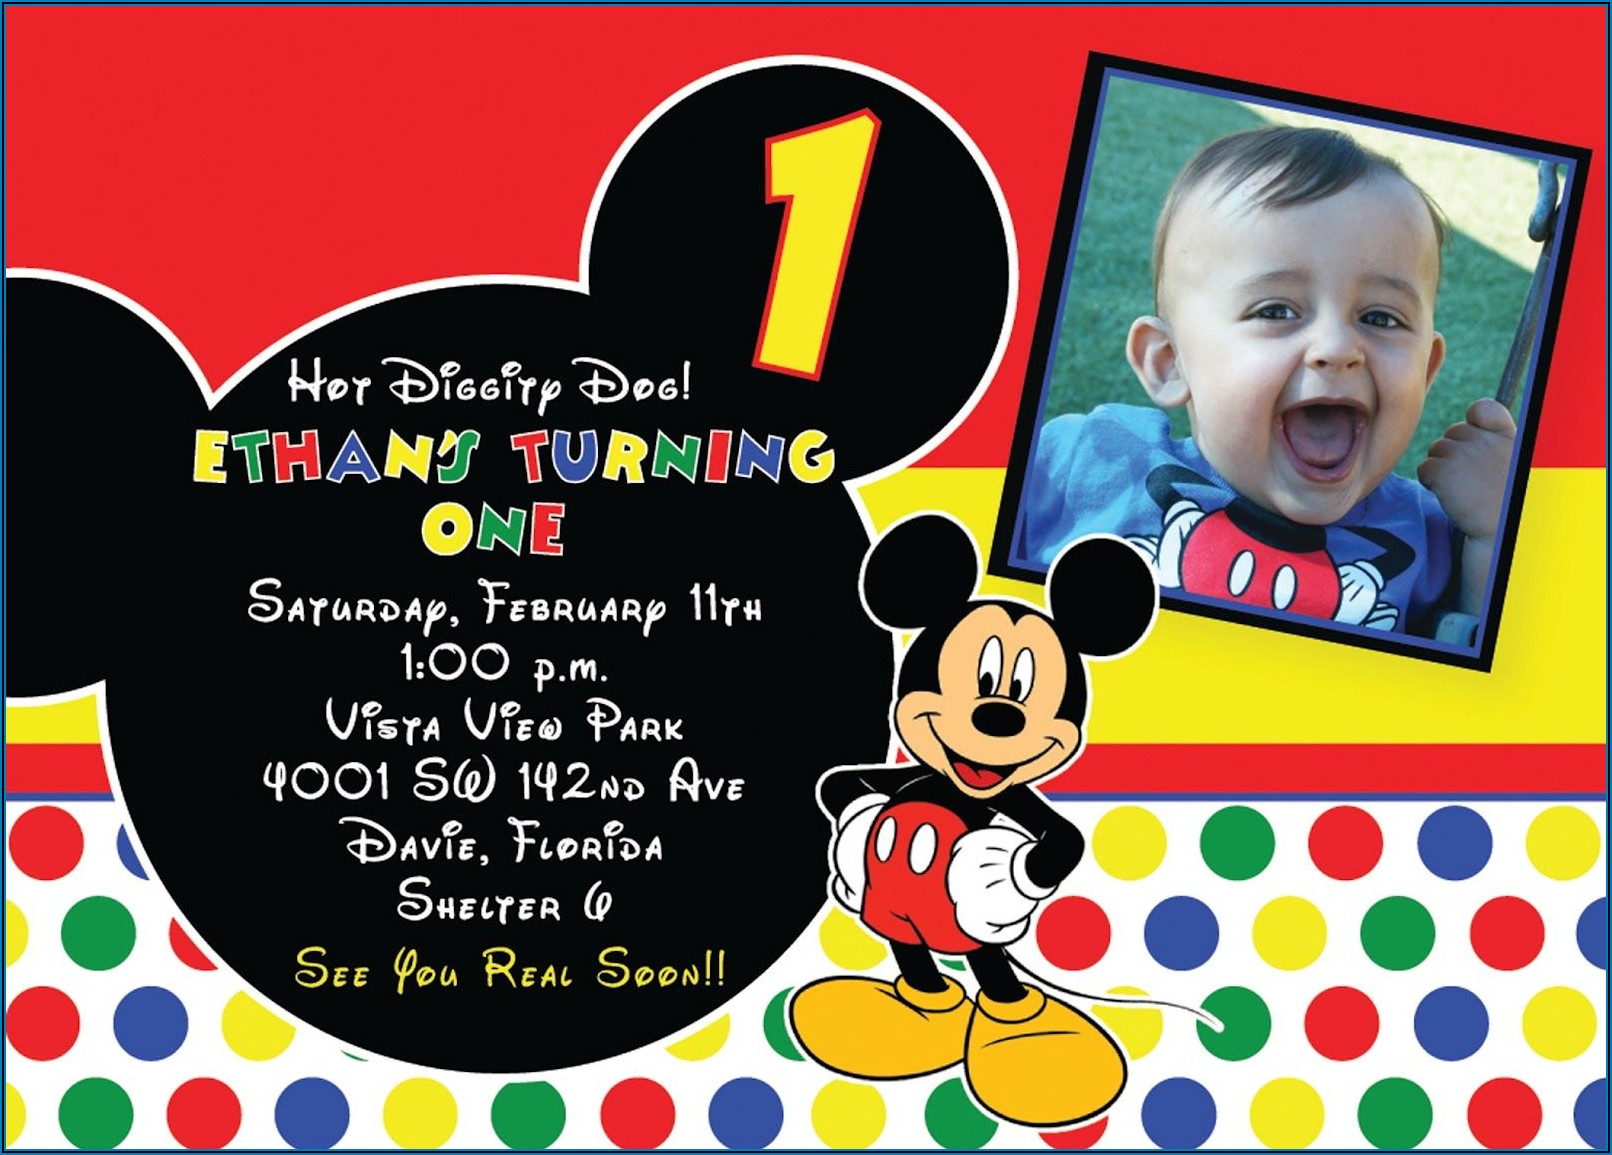 Free Mickey Mouse Birthday Invitation Card Maker